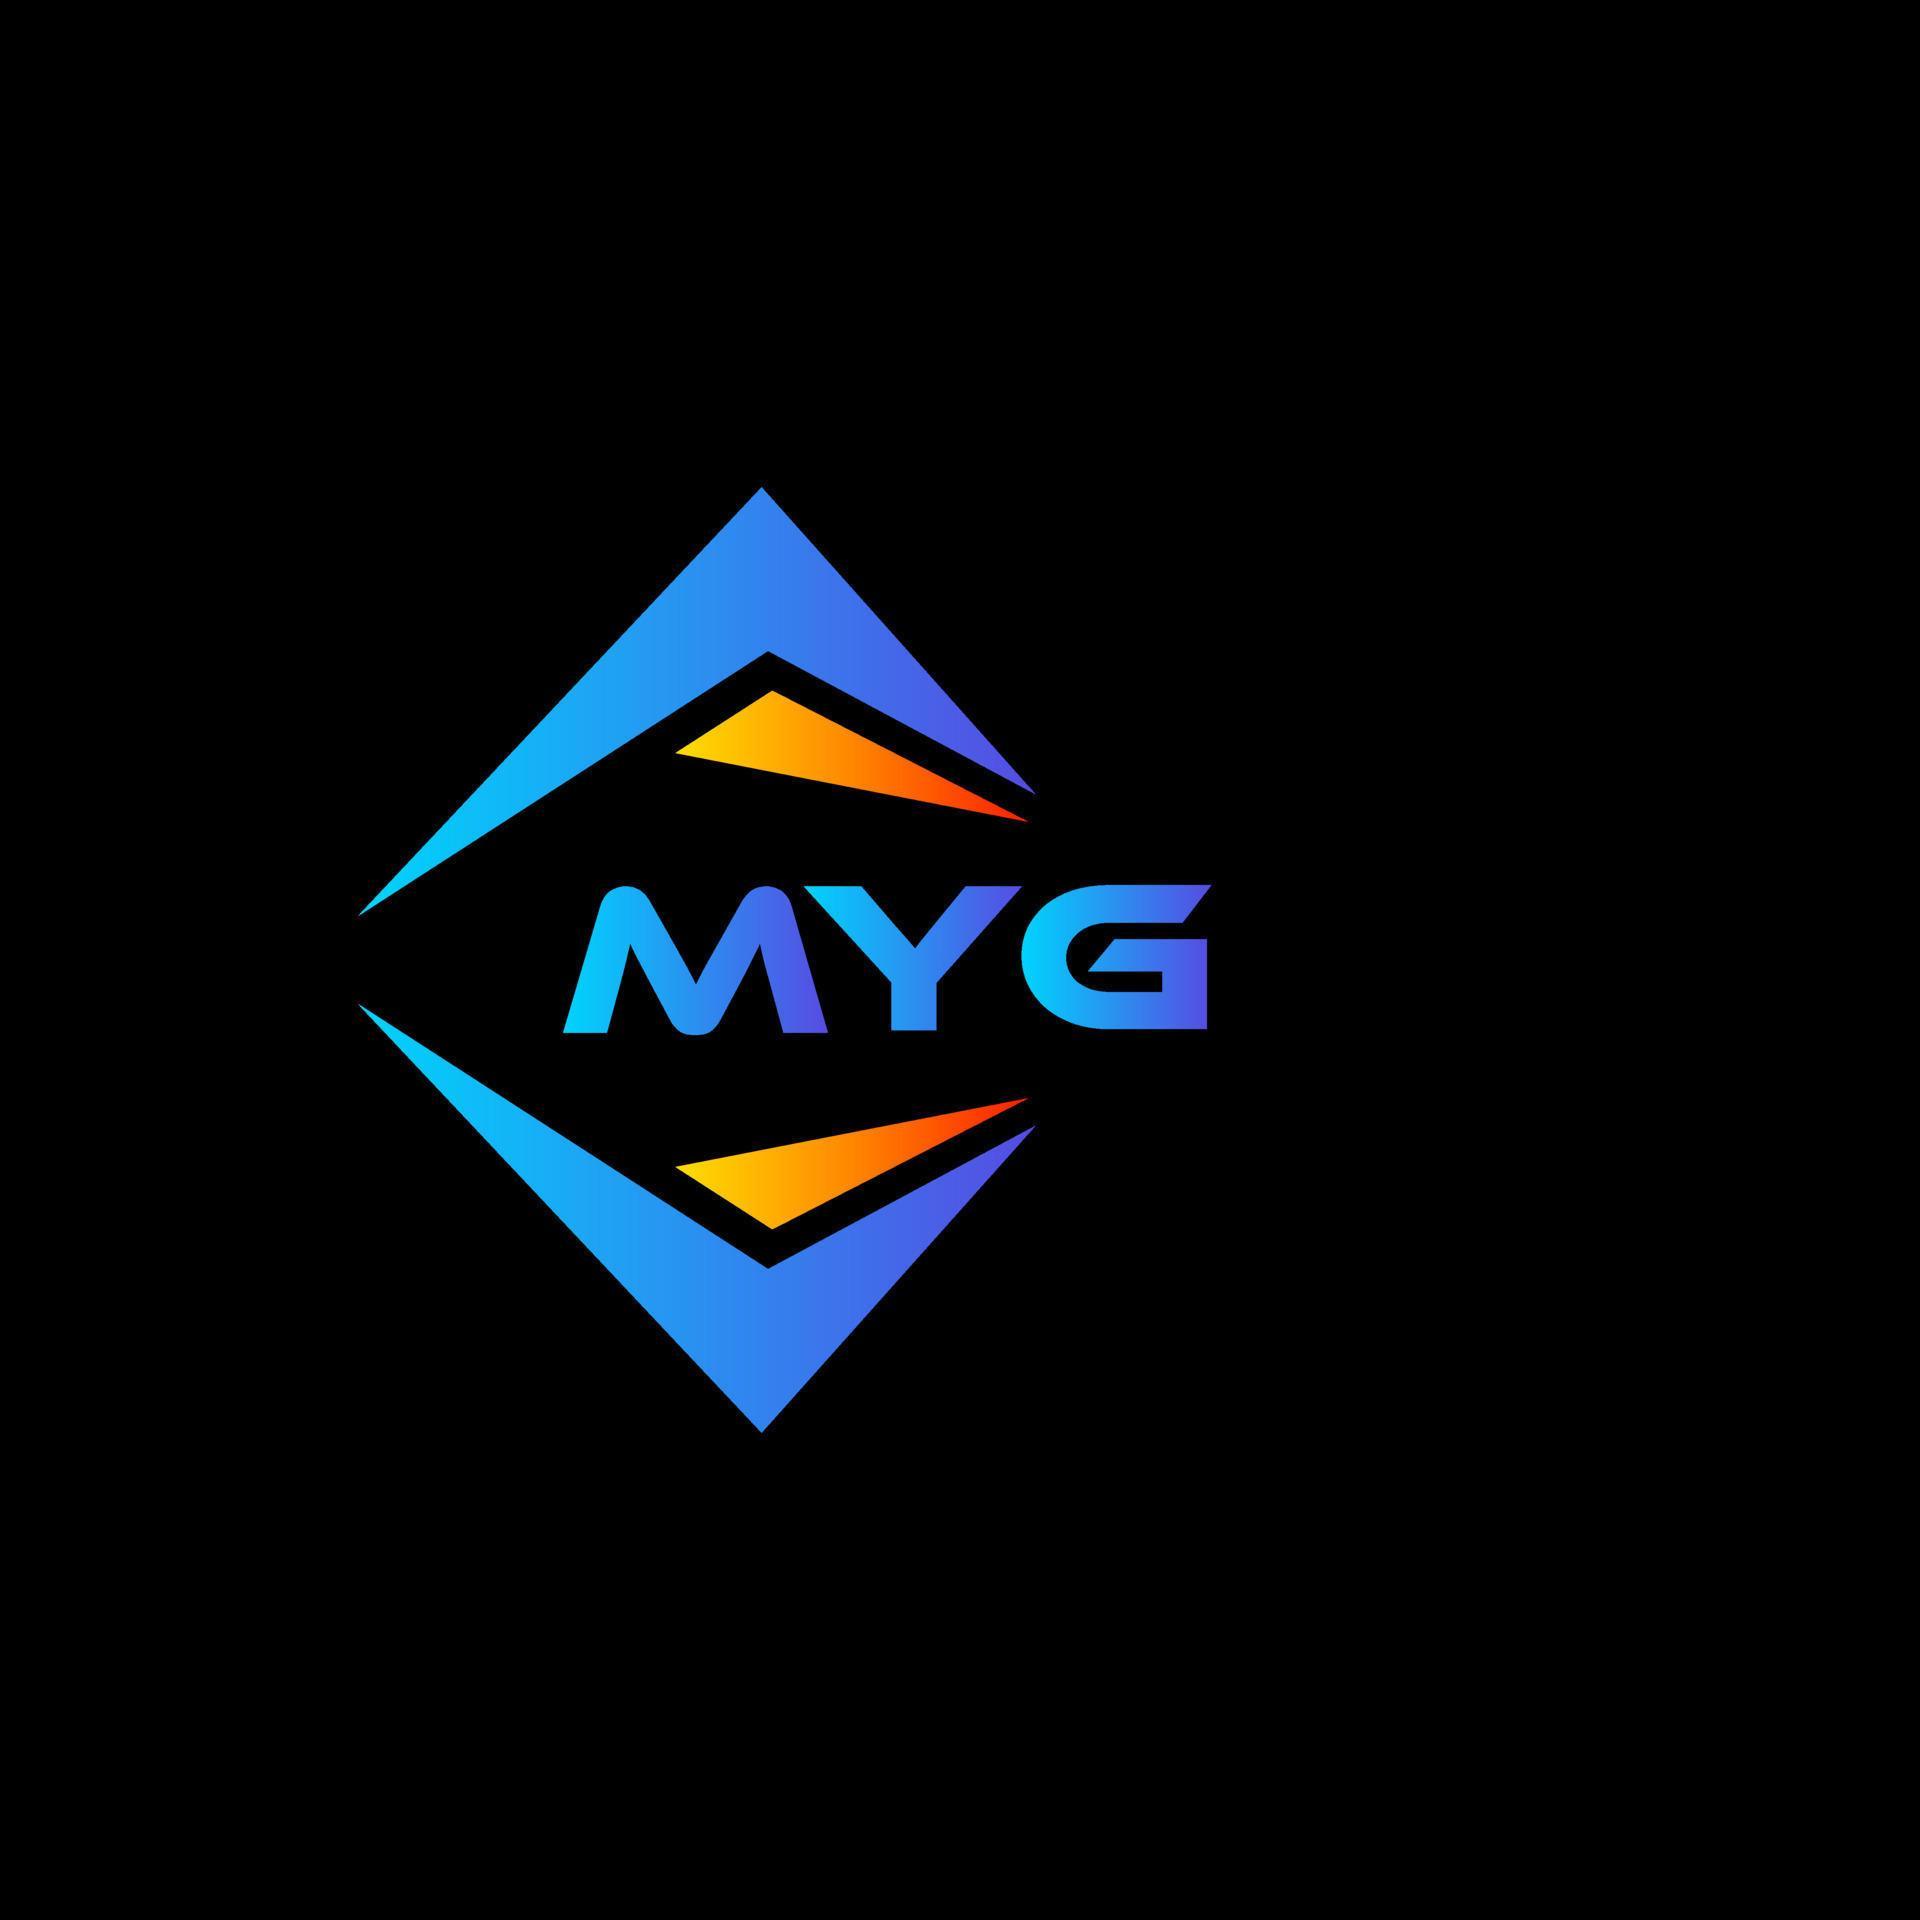 MYG abstract technology logo design on Black background. MYG creative ...